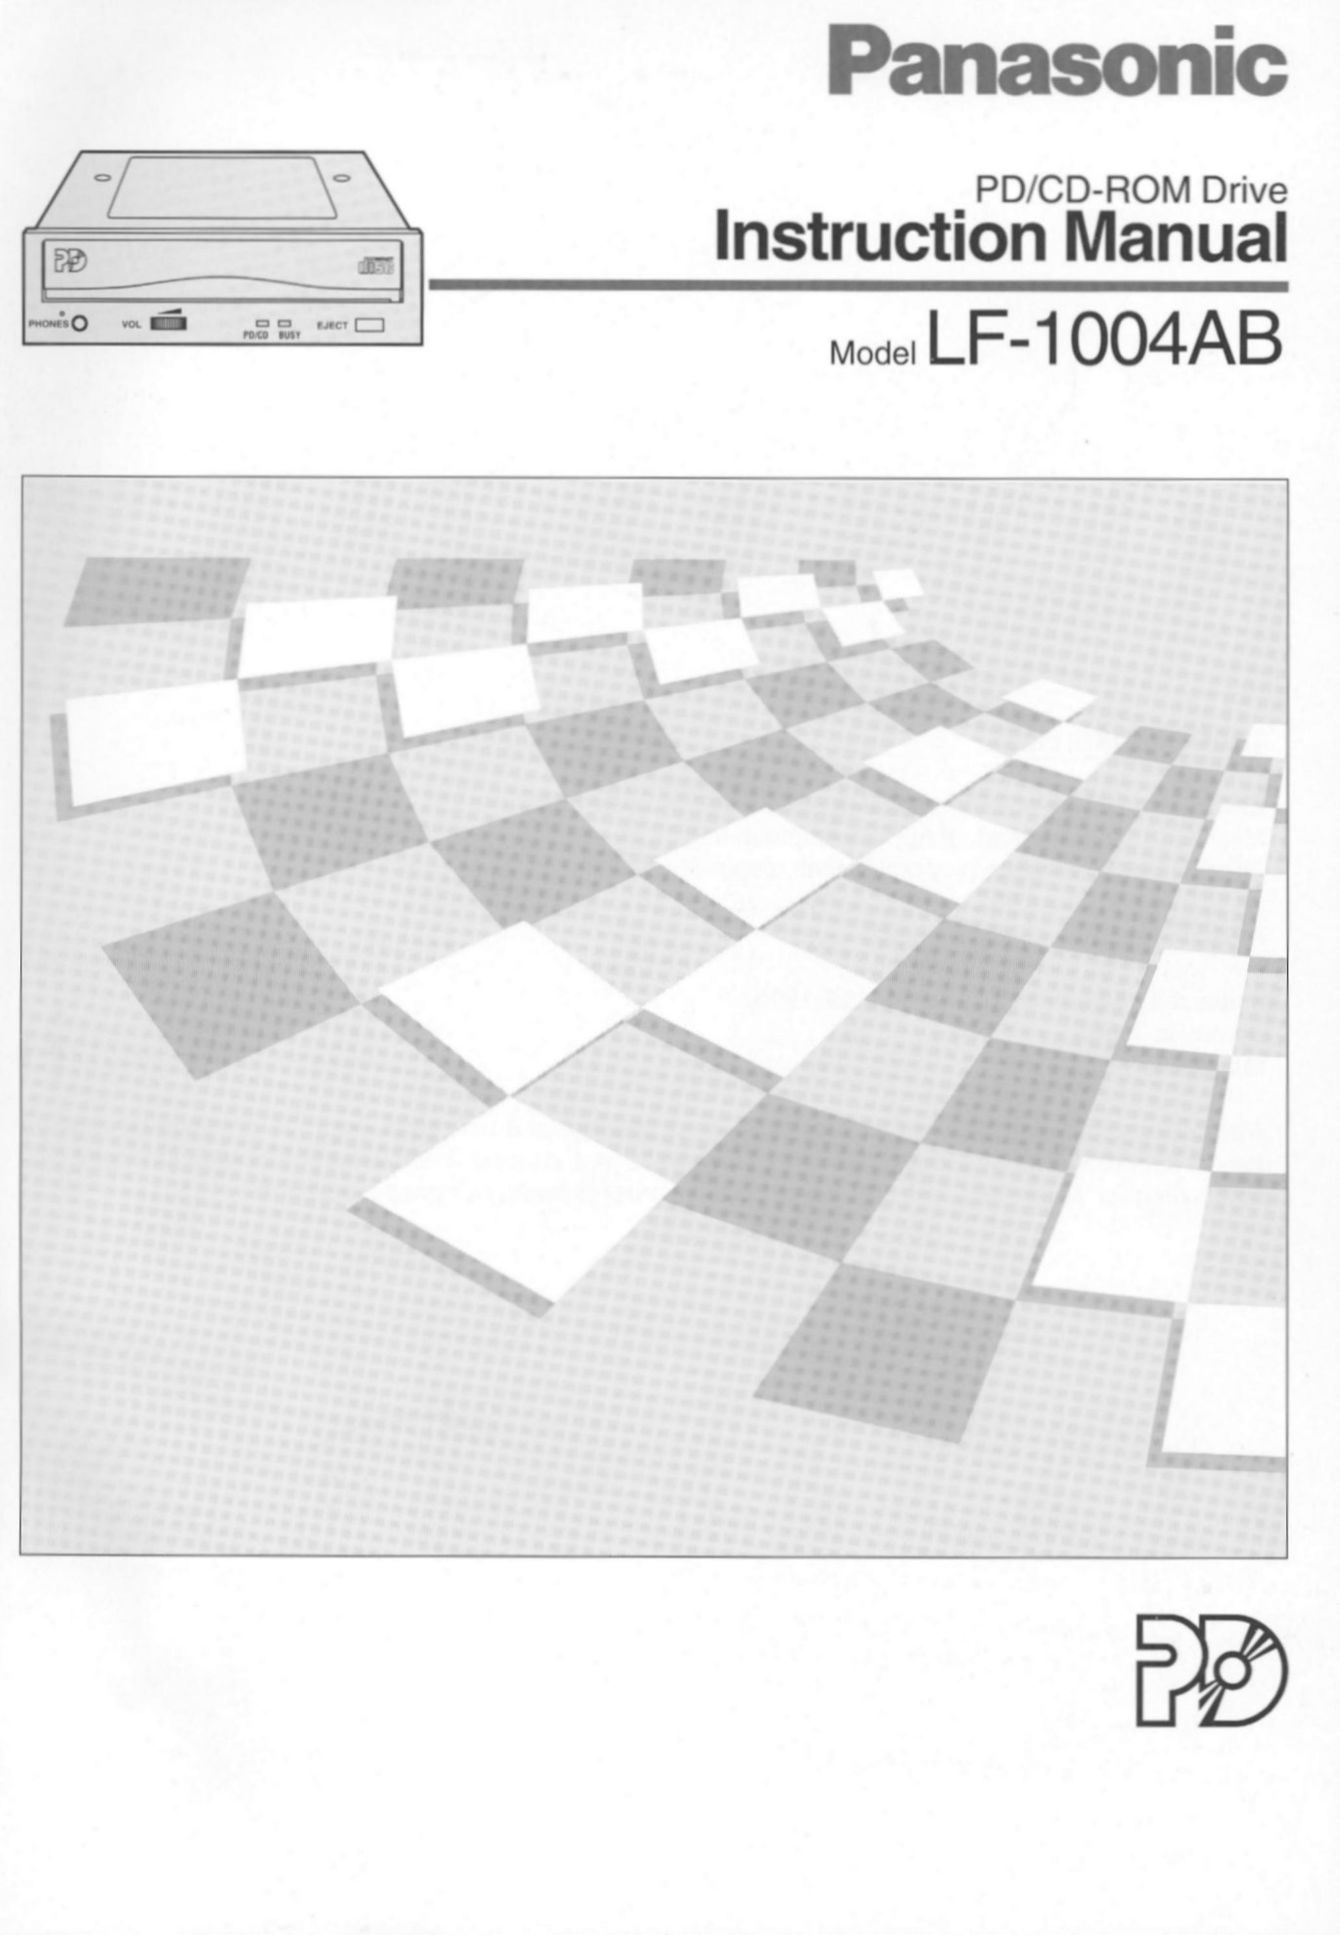 Panasonic LF-1004AB Computer Drive User Manual